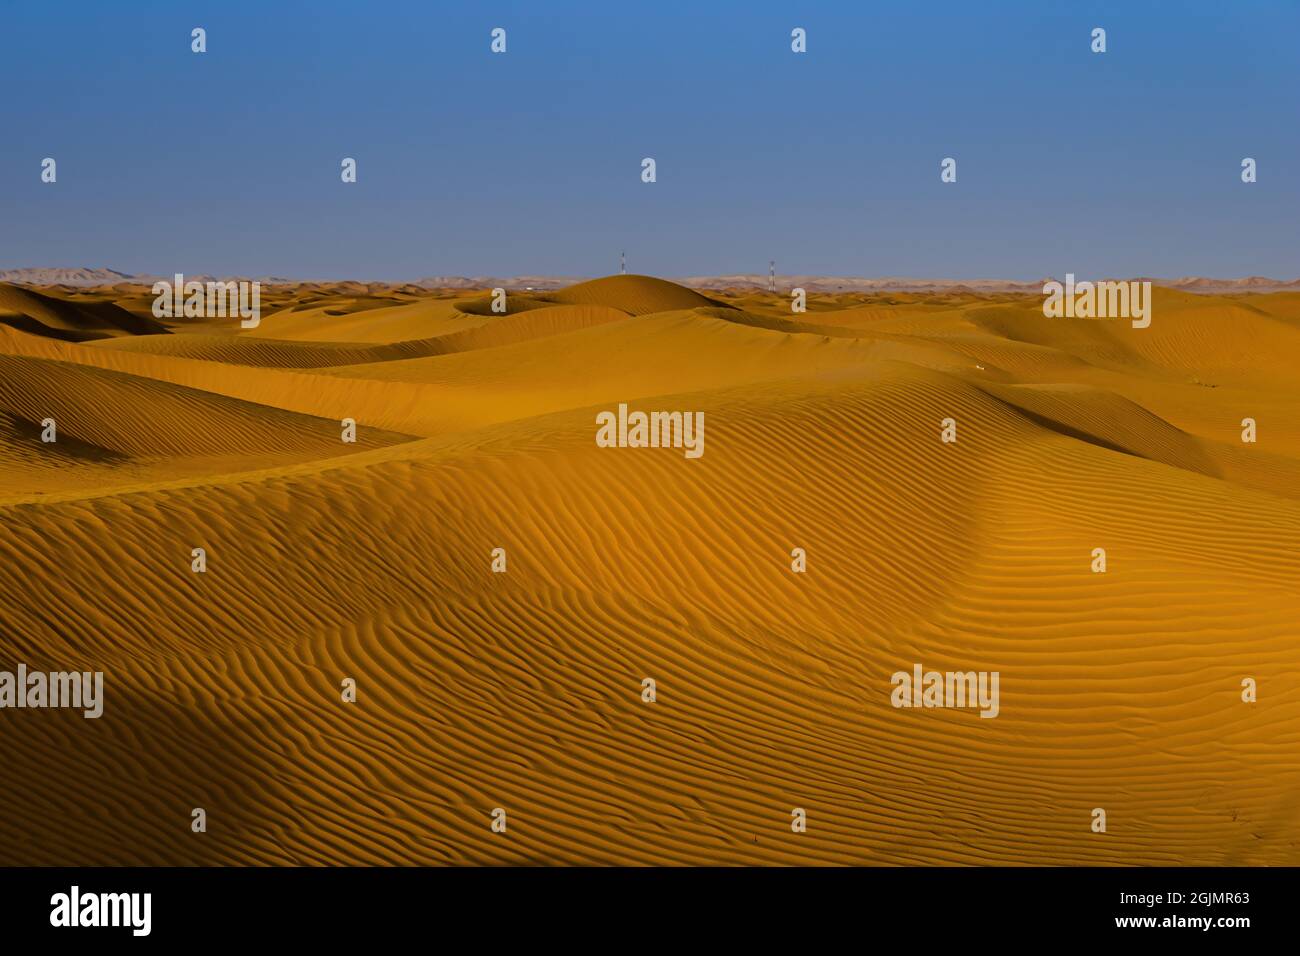 Saudi arabia hot hi-res stock photography and images - Alamy